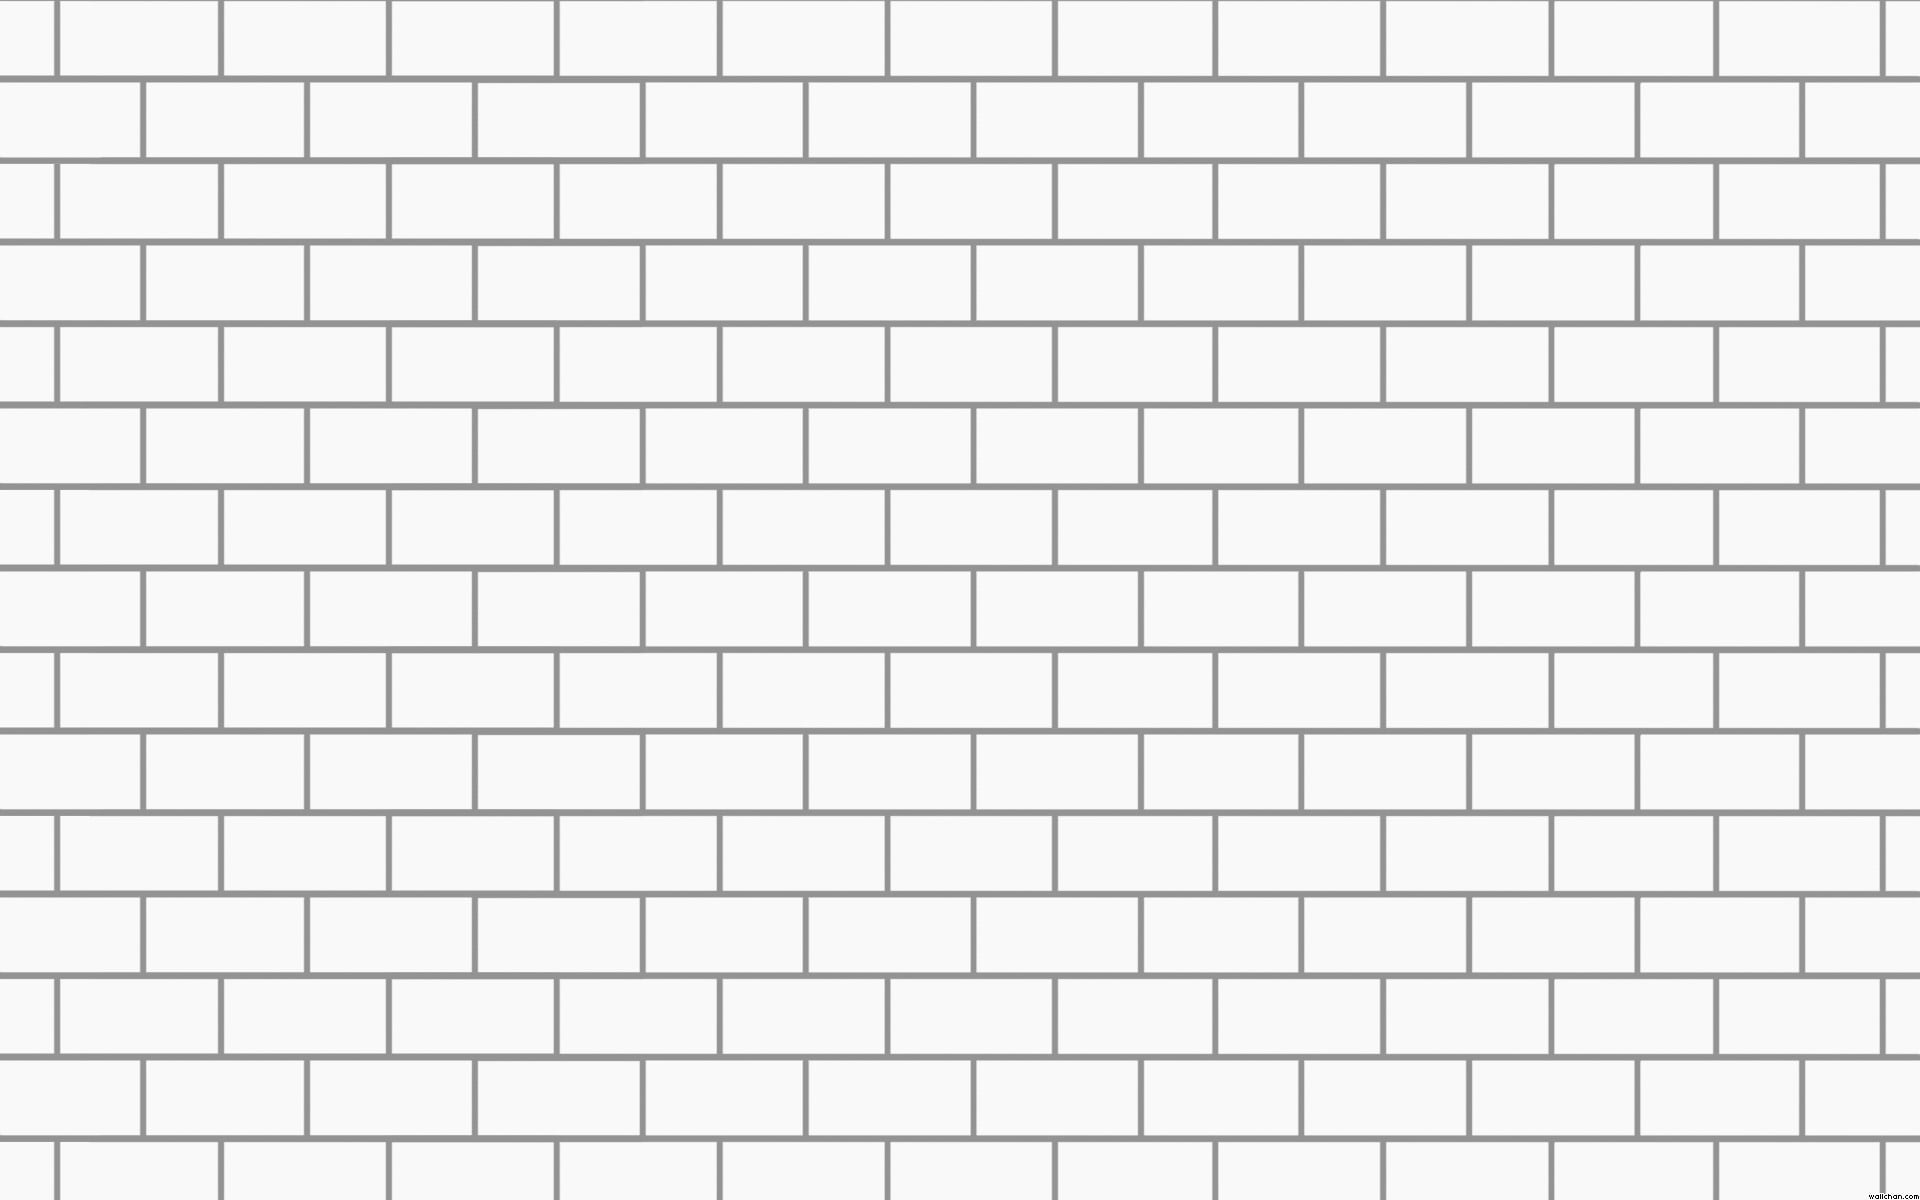 Brick Wall Sketch 33 